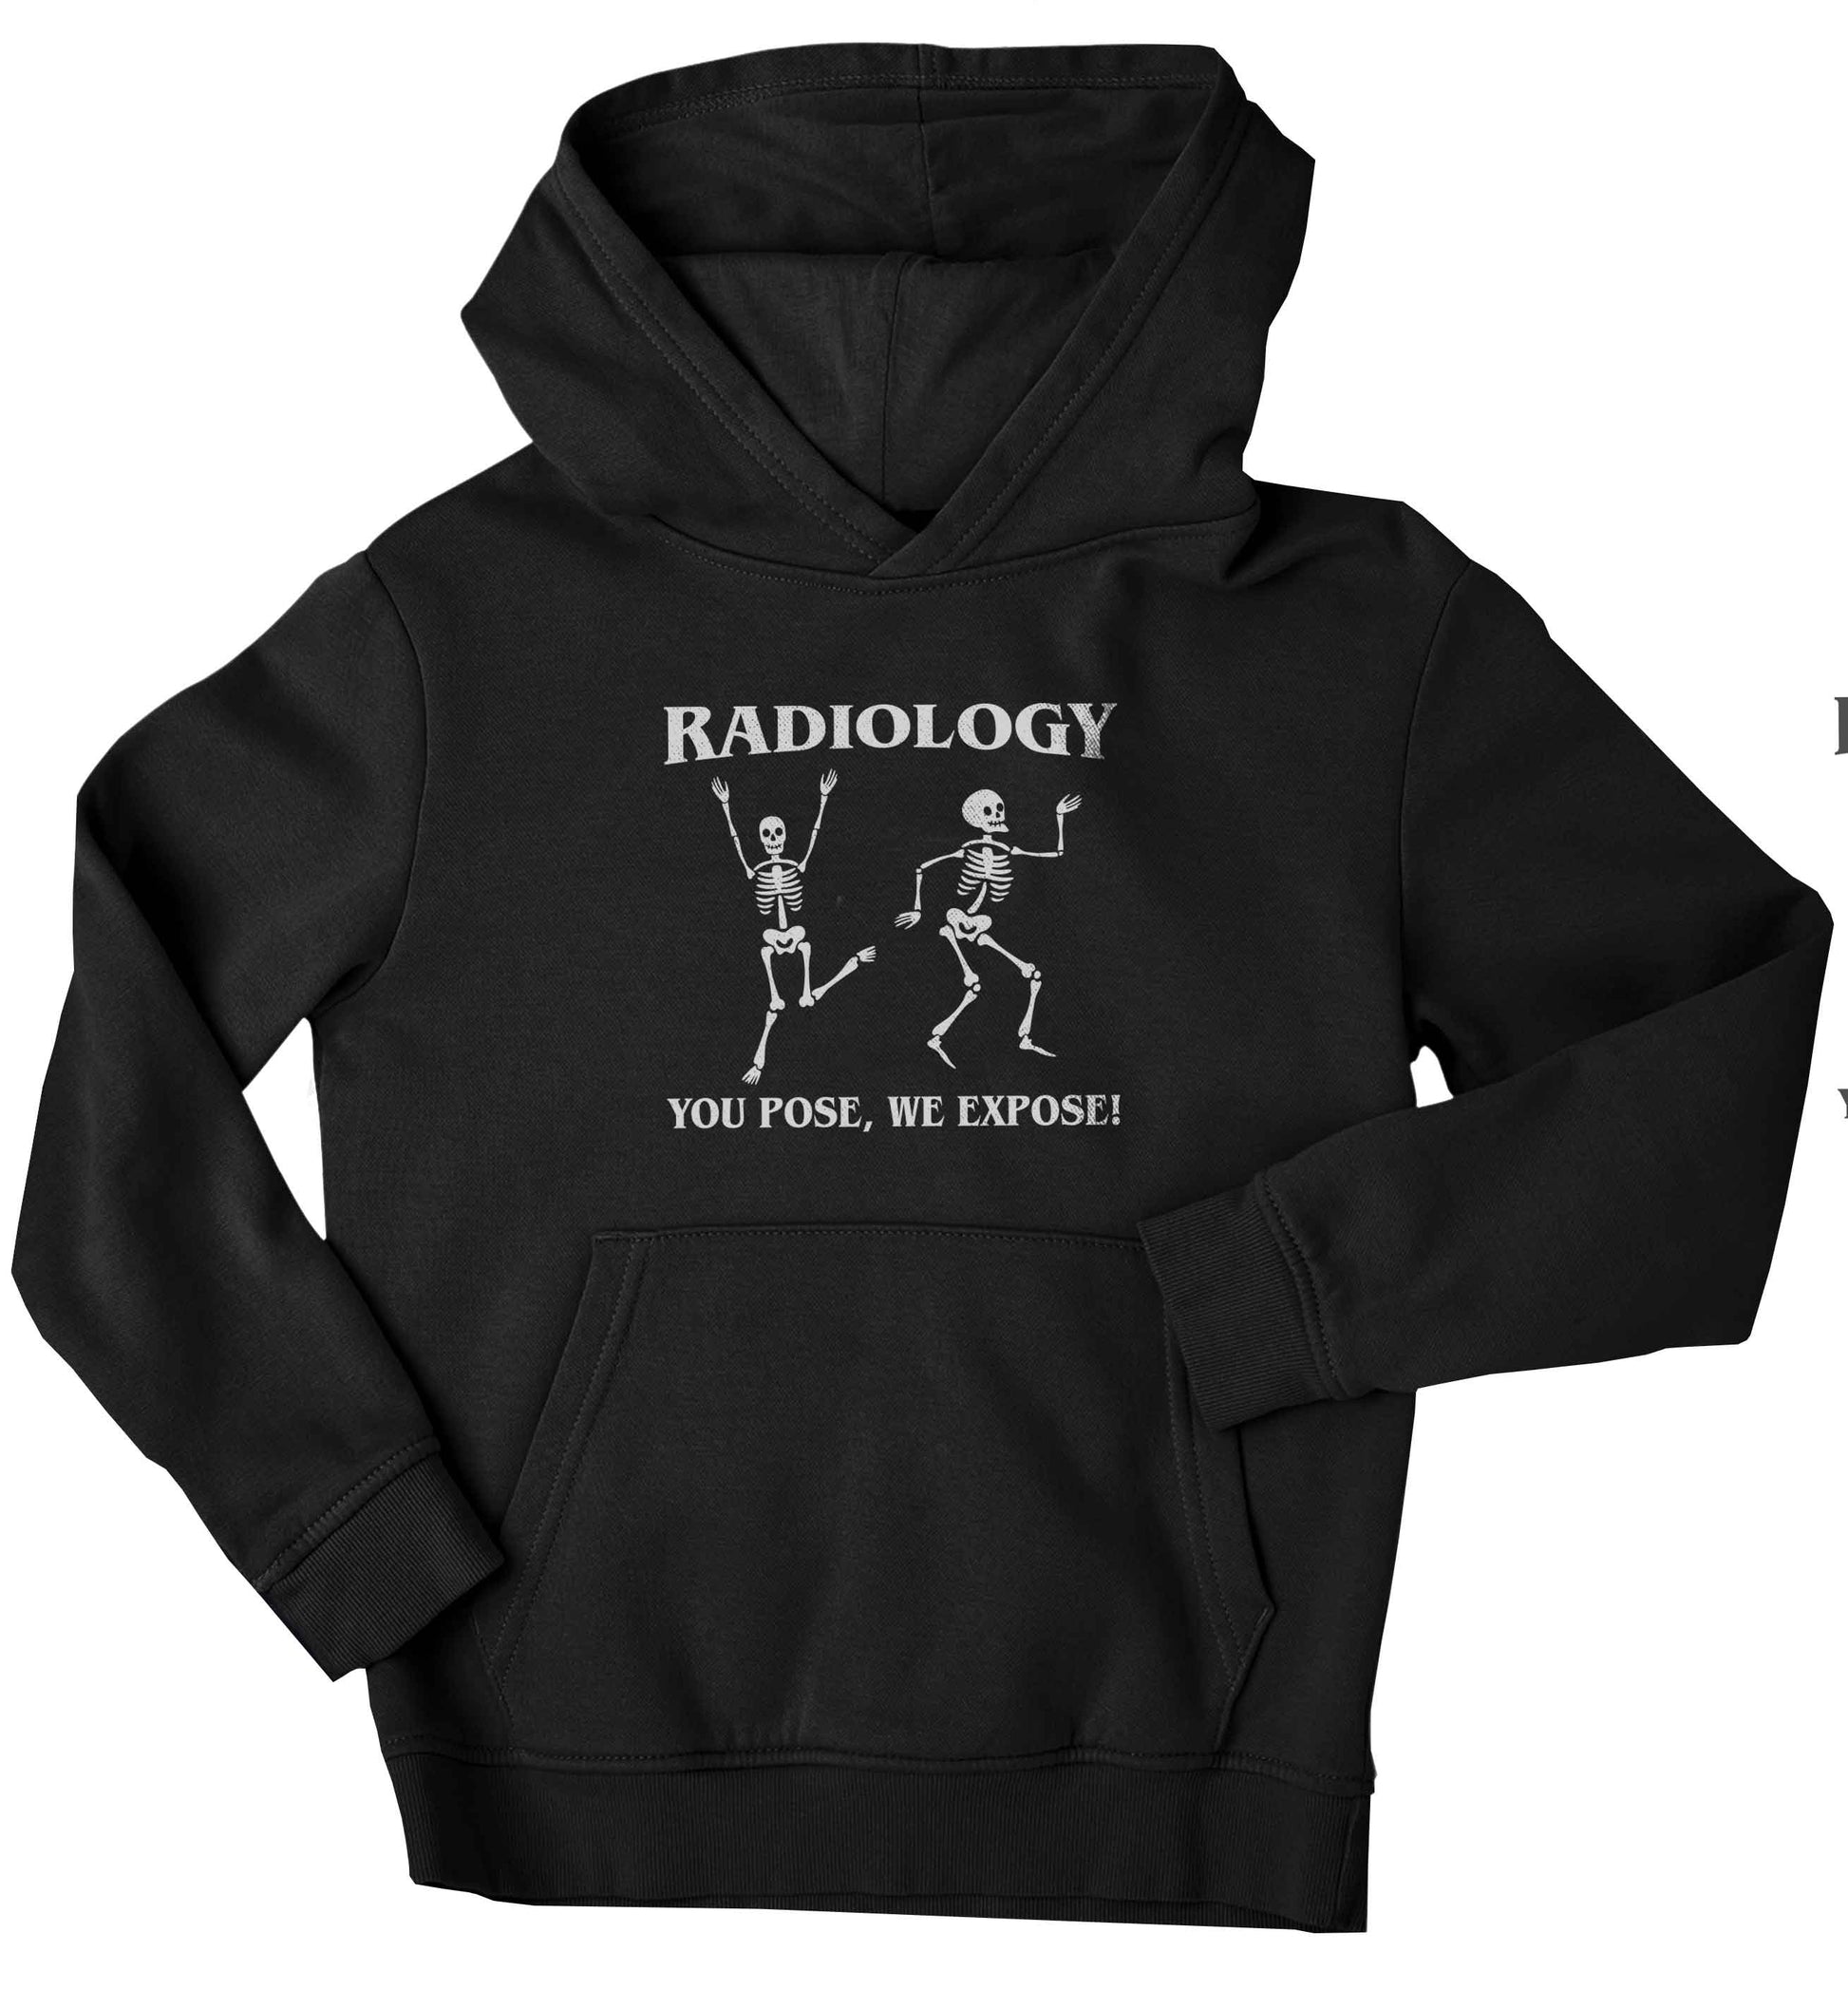 Radiology you pose we expose children's black hoodie 12-13 Years